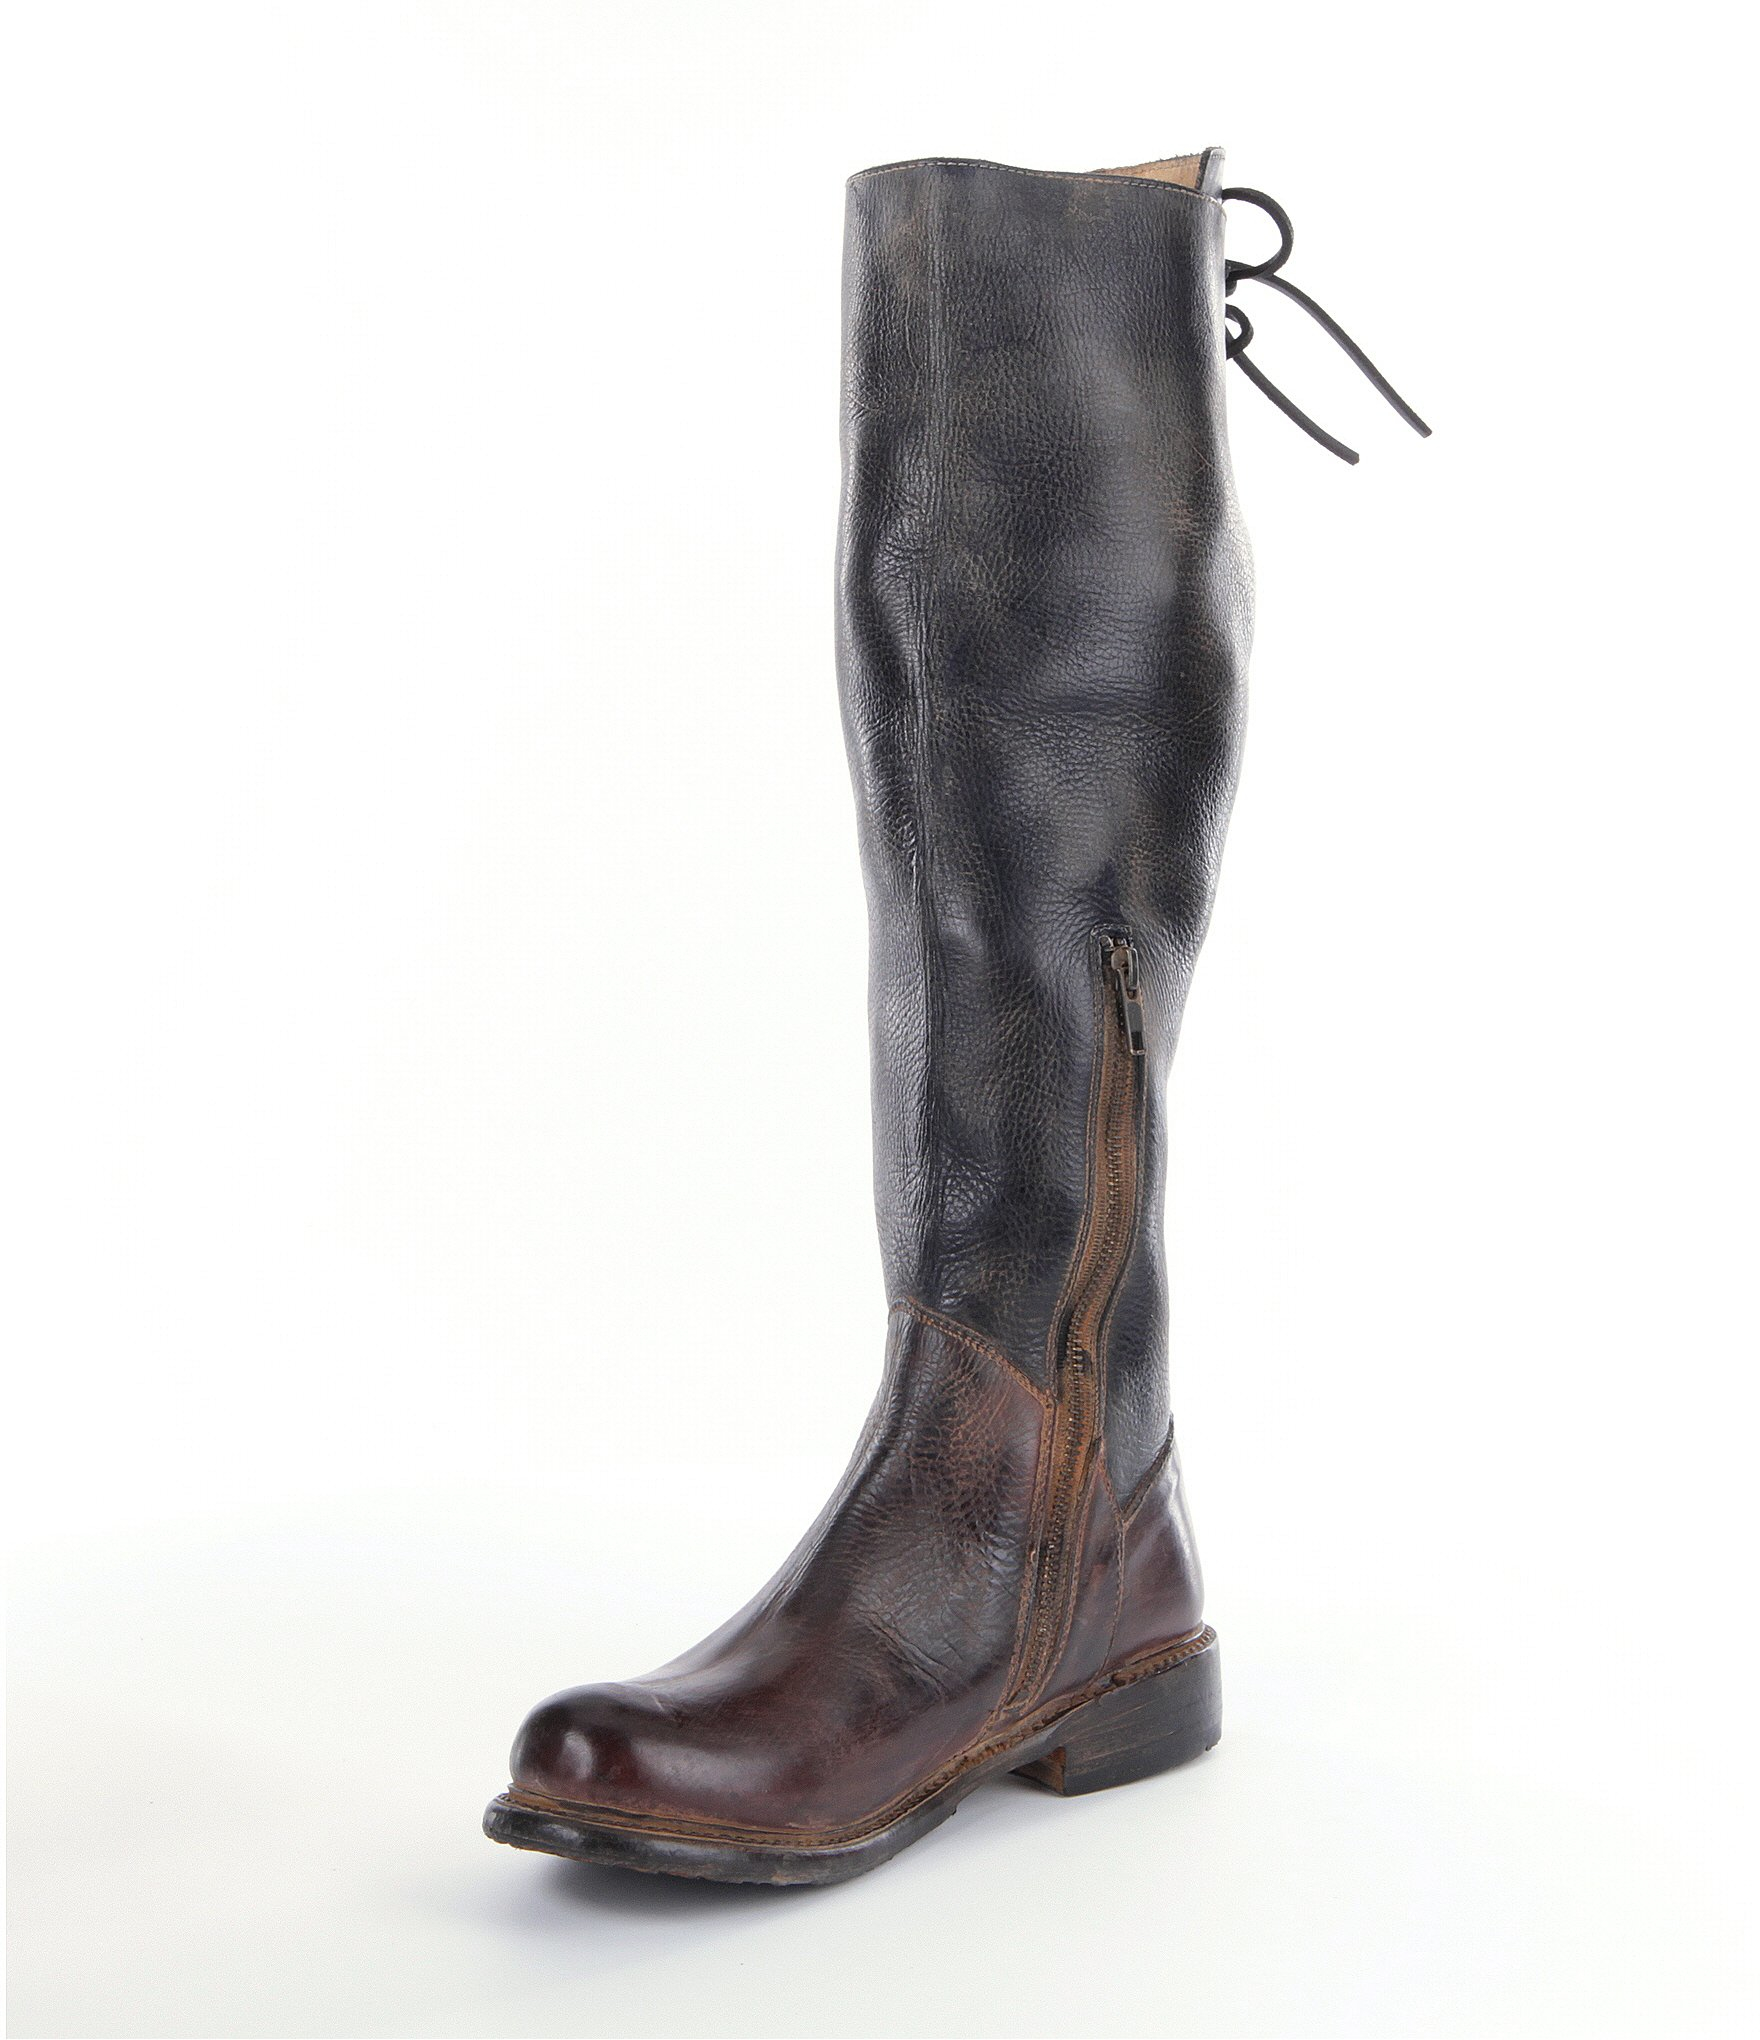 Lyst - Bed Stu Cobbler Manchester Ii Tall Boots in Black